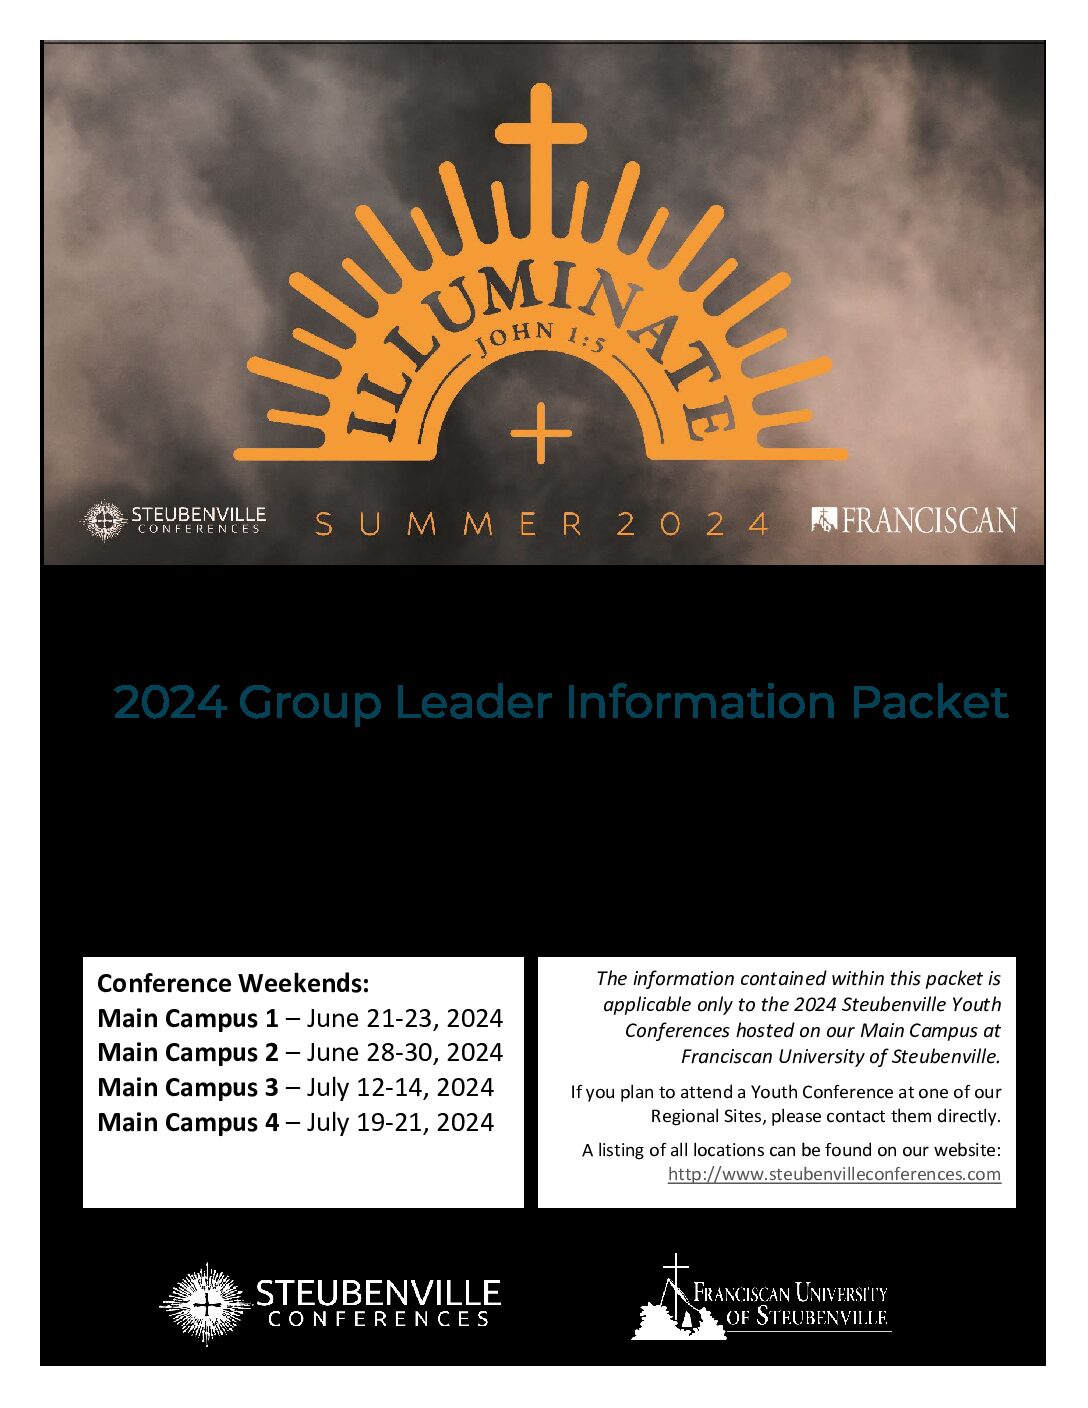 2024 MC Group Leader Information Packet Steubenville Conferences